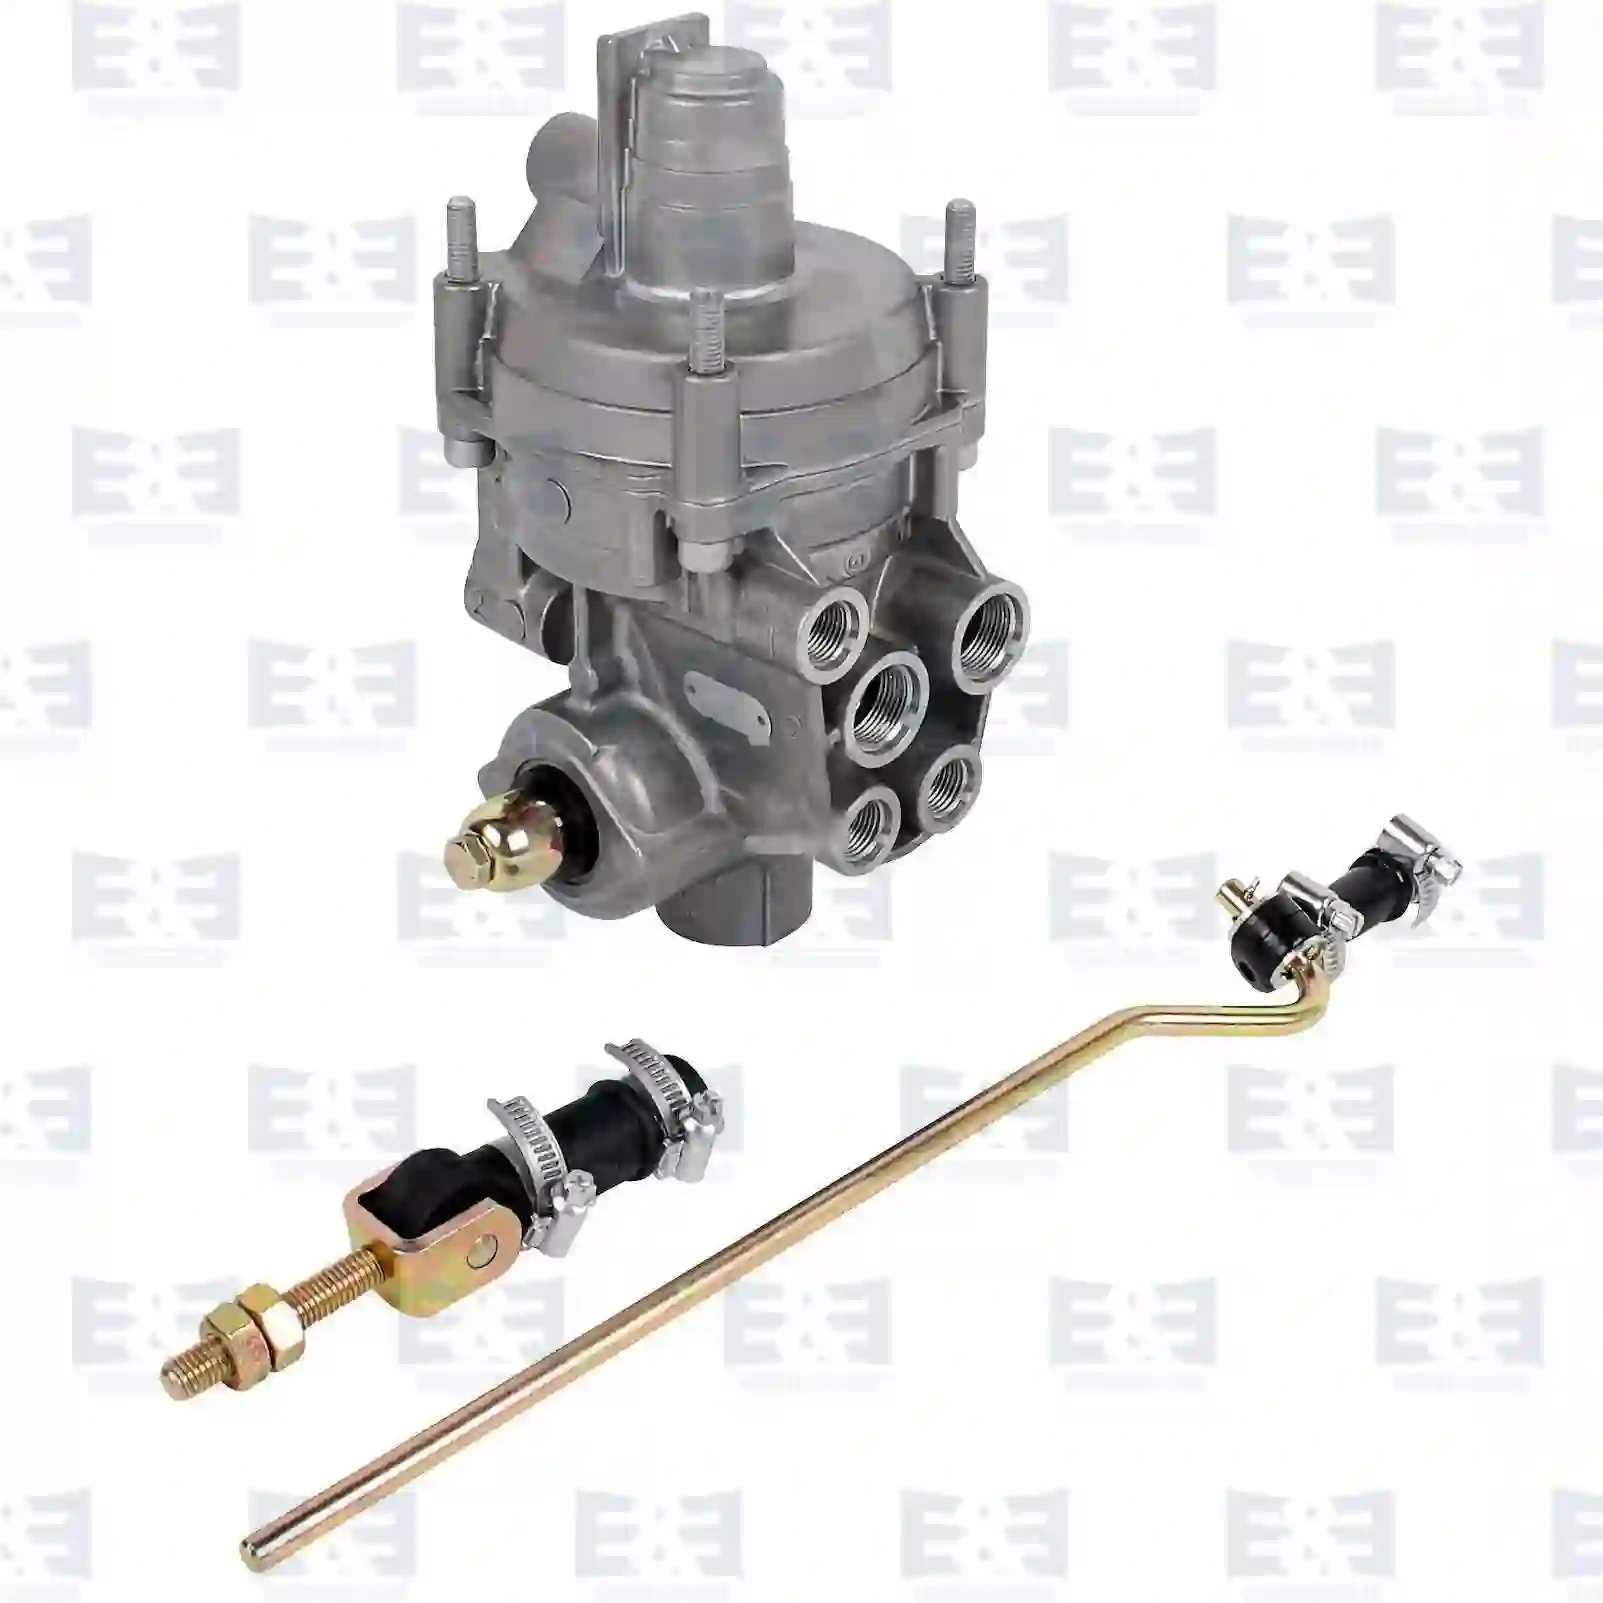 Load sensitive valve, 2E2296216, 1325324, 1325324R, 1506665, BBU8129, AJA0918001, AJA09181, CF350908AJA09181, 500003984, 2090056, ZG50522-0008 ||  2E2296216 E&E Truck Spare Parts | Truck Spare Parts, Auotomotive Spare Parts Load sensitive valve, 2E2296216, 1325324, 1325324R, 1506665, BBU8129, AJA0918001, AJA09181, CF350908AJA09181, 500003984, 2090056, ZG50522-0008 ||  2E2296216 E&E Truck Spare Parts | Truck Spare Parts, Auotomotive Spare Parts